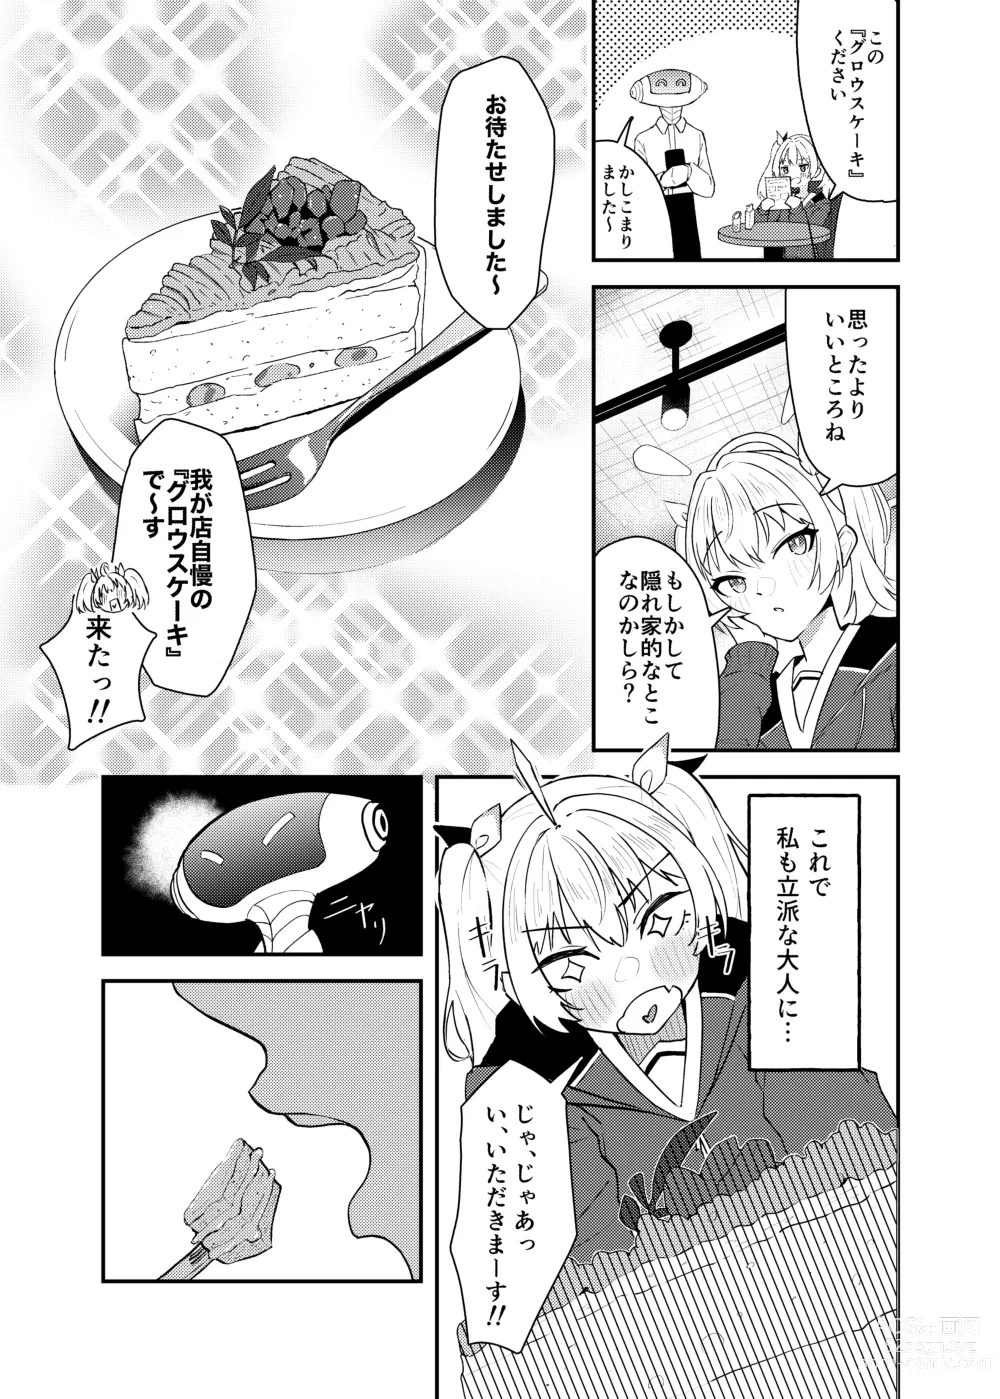 Page 6 of doujinshi Koi to Yoshimi, Tokidoki Sweets